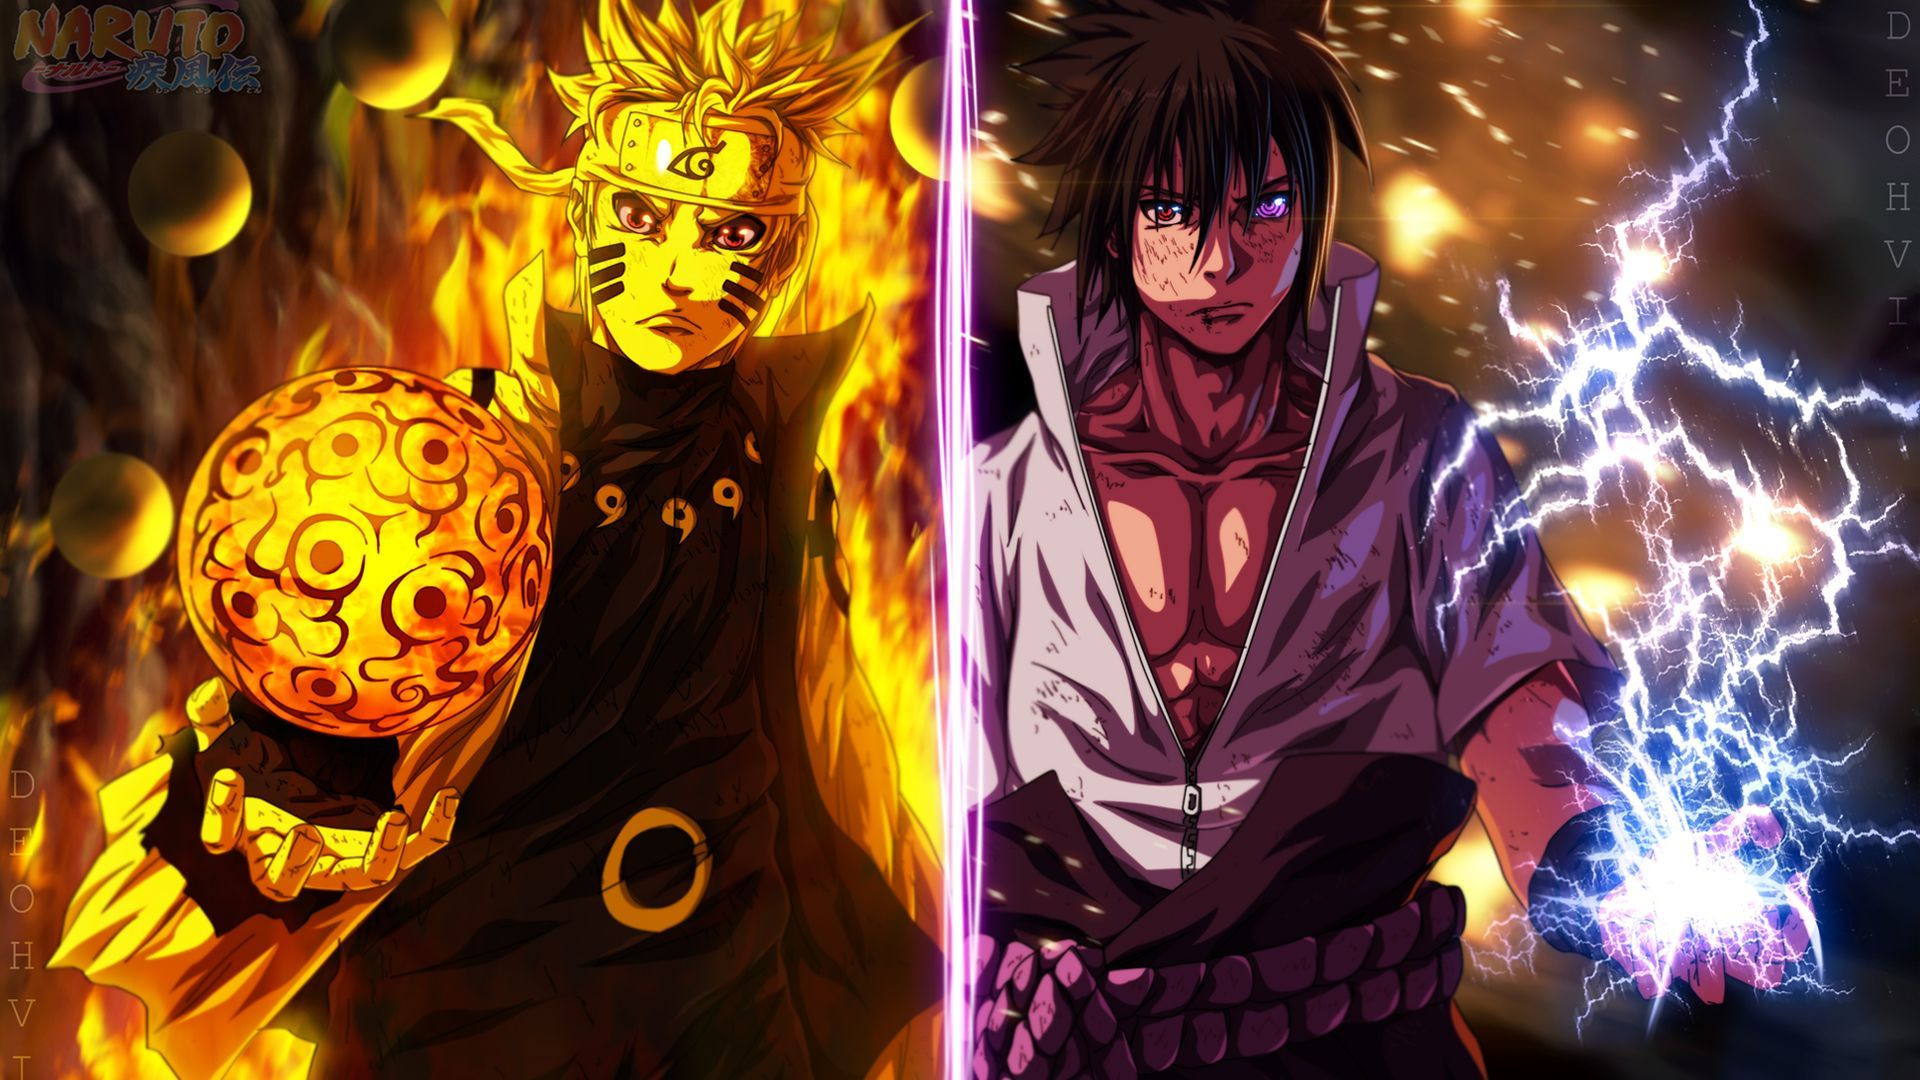 Sasuke and Naruto Wallpaper background picture